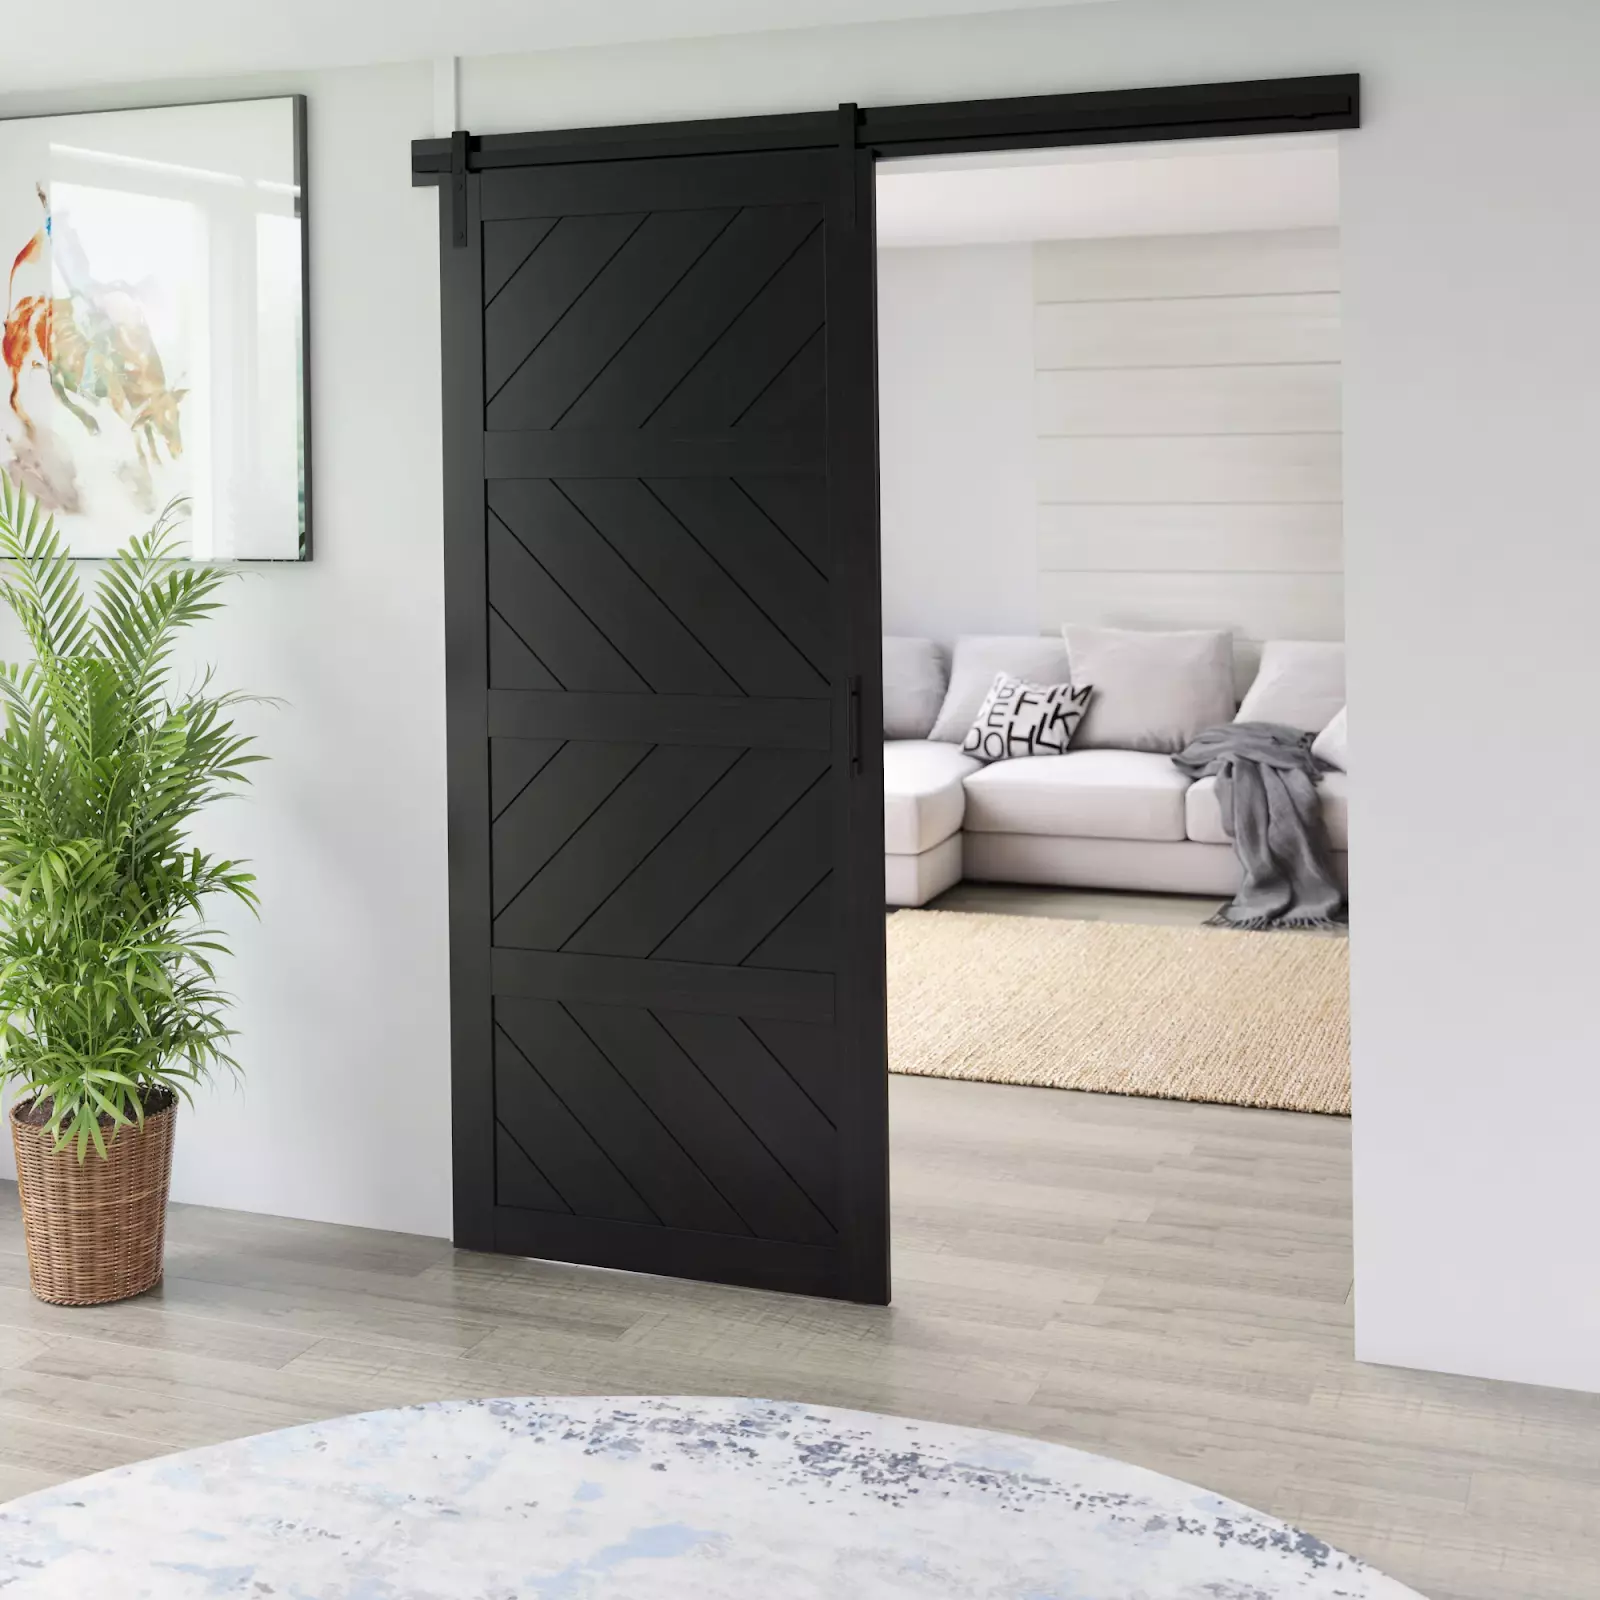 The Ultimate Guide to Room Sliding Doors: Enhance Your Space with Online Door Store Triodoors in Toronto